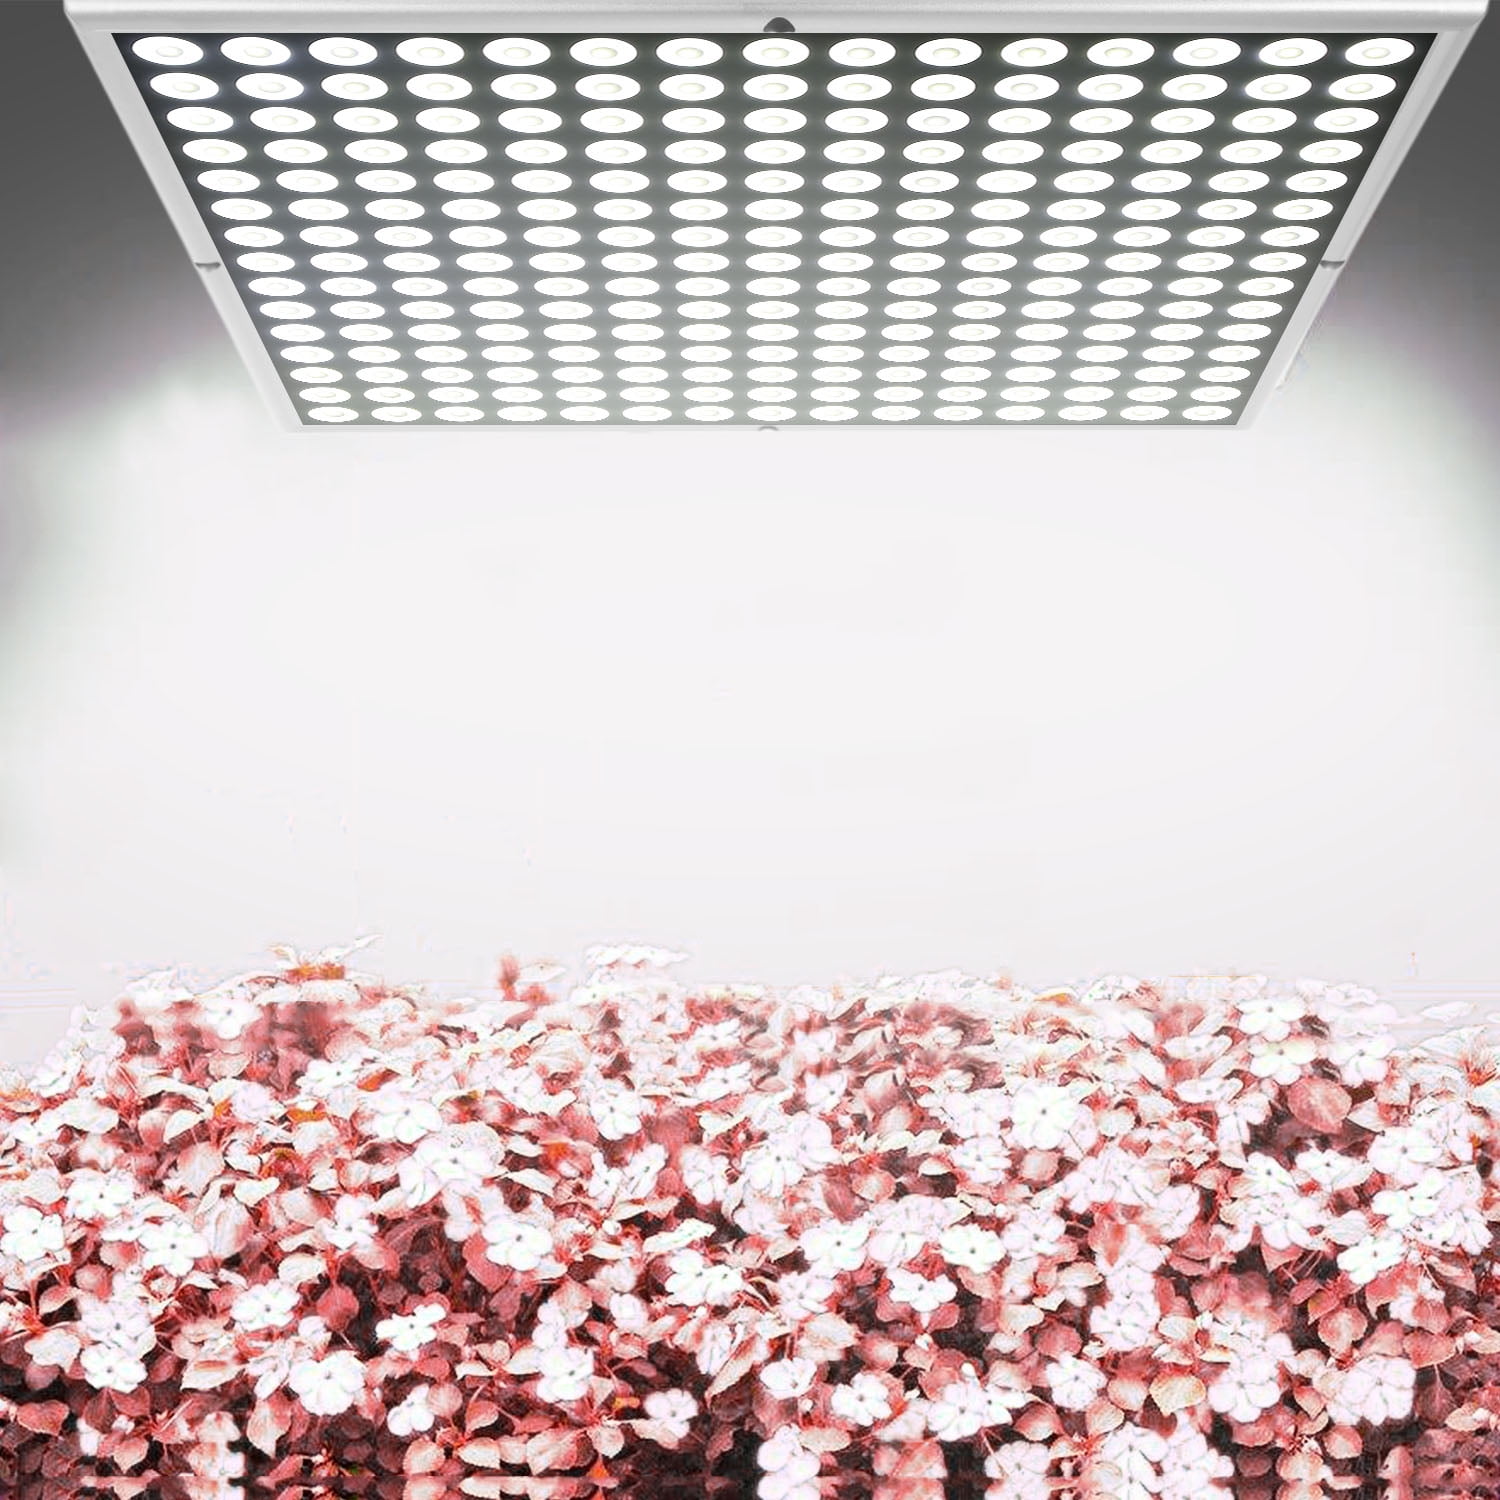 45W 225LEDs Grow Light Panel Full Spectrum Hydroponic Plants Veg Flower indoor 